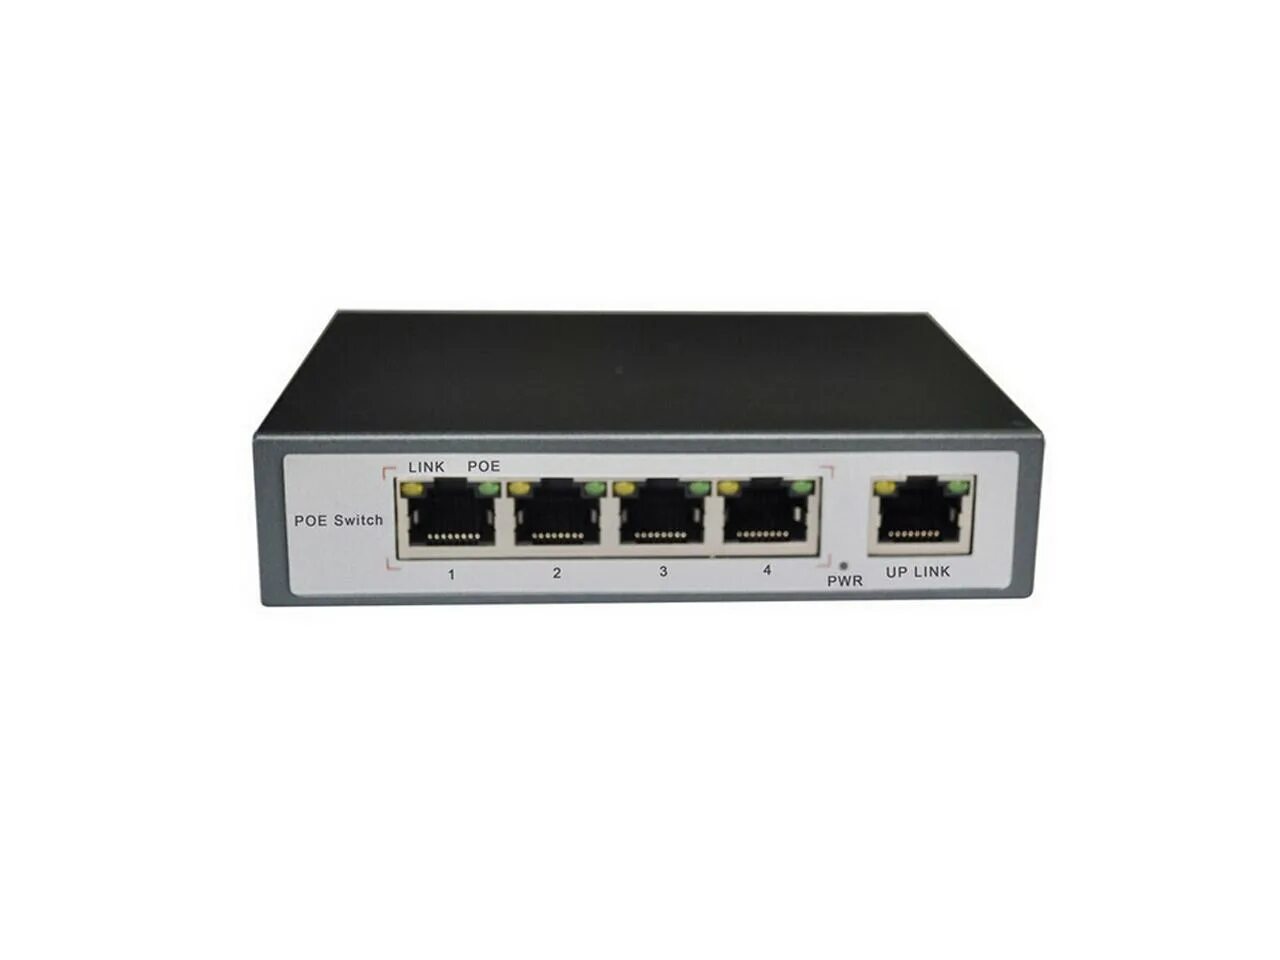 Poe switch 4. TP-link POE коммутатор 8 портов. POE Switch 4 Port. POE коммутатор 4*2. Коммутатор 10/100mb на 56 порта fast Ethernet.